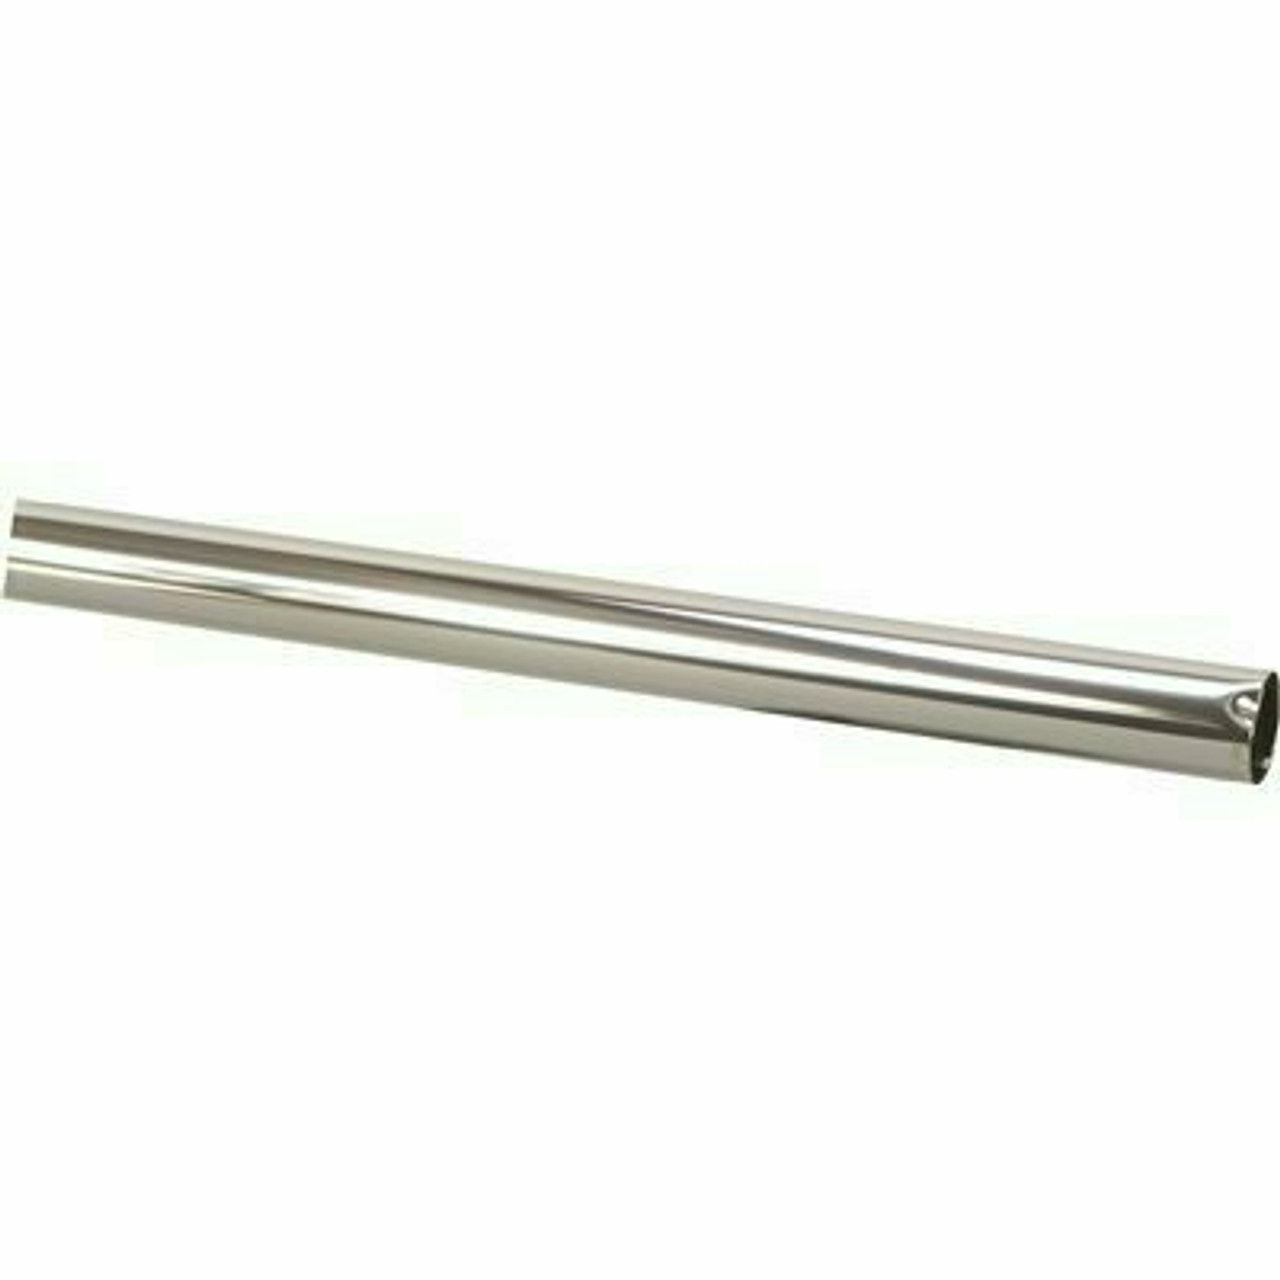 National Brand Alternative Shower Rod, Stainless Steel, 1 In. X 5 Ft.